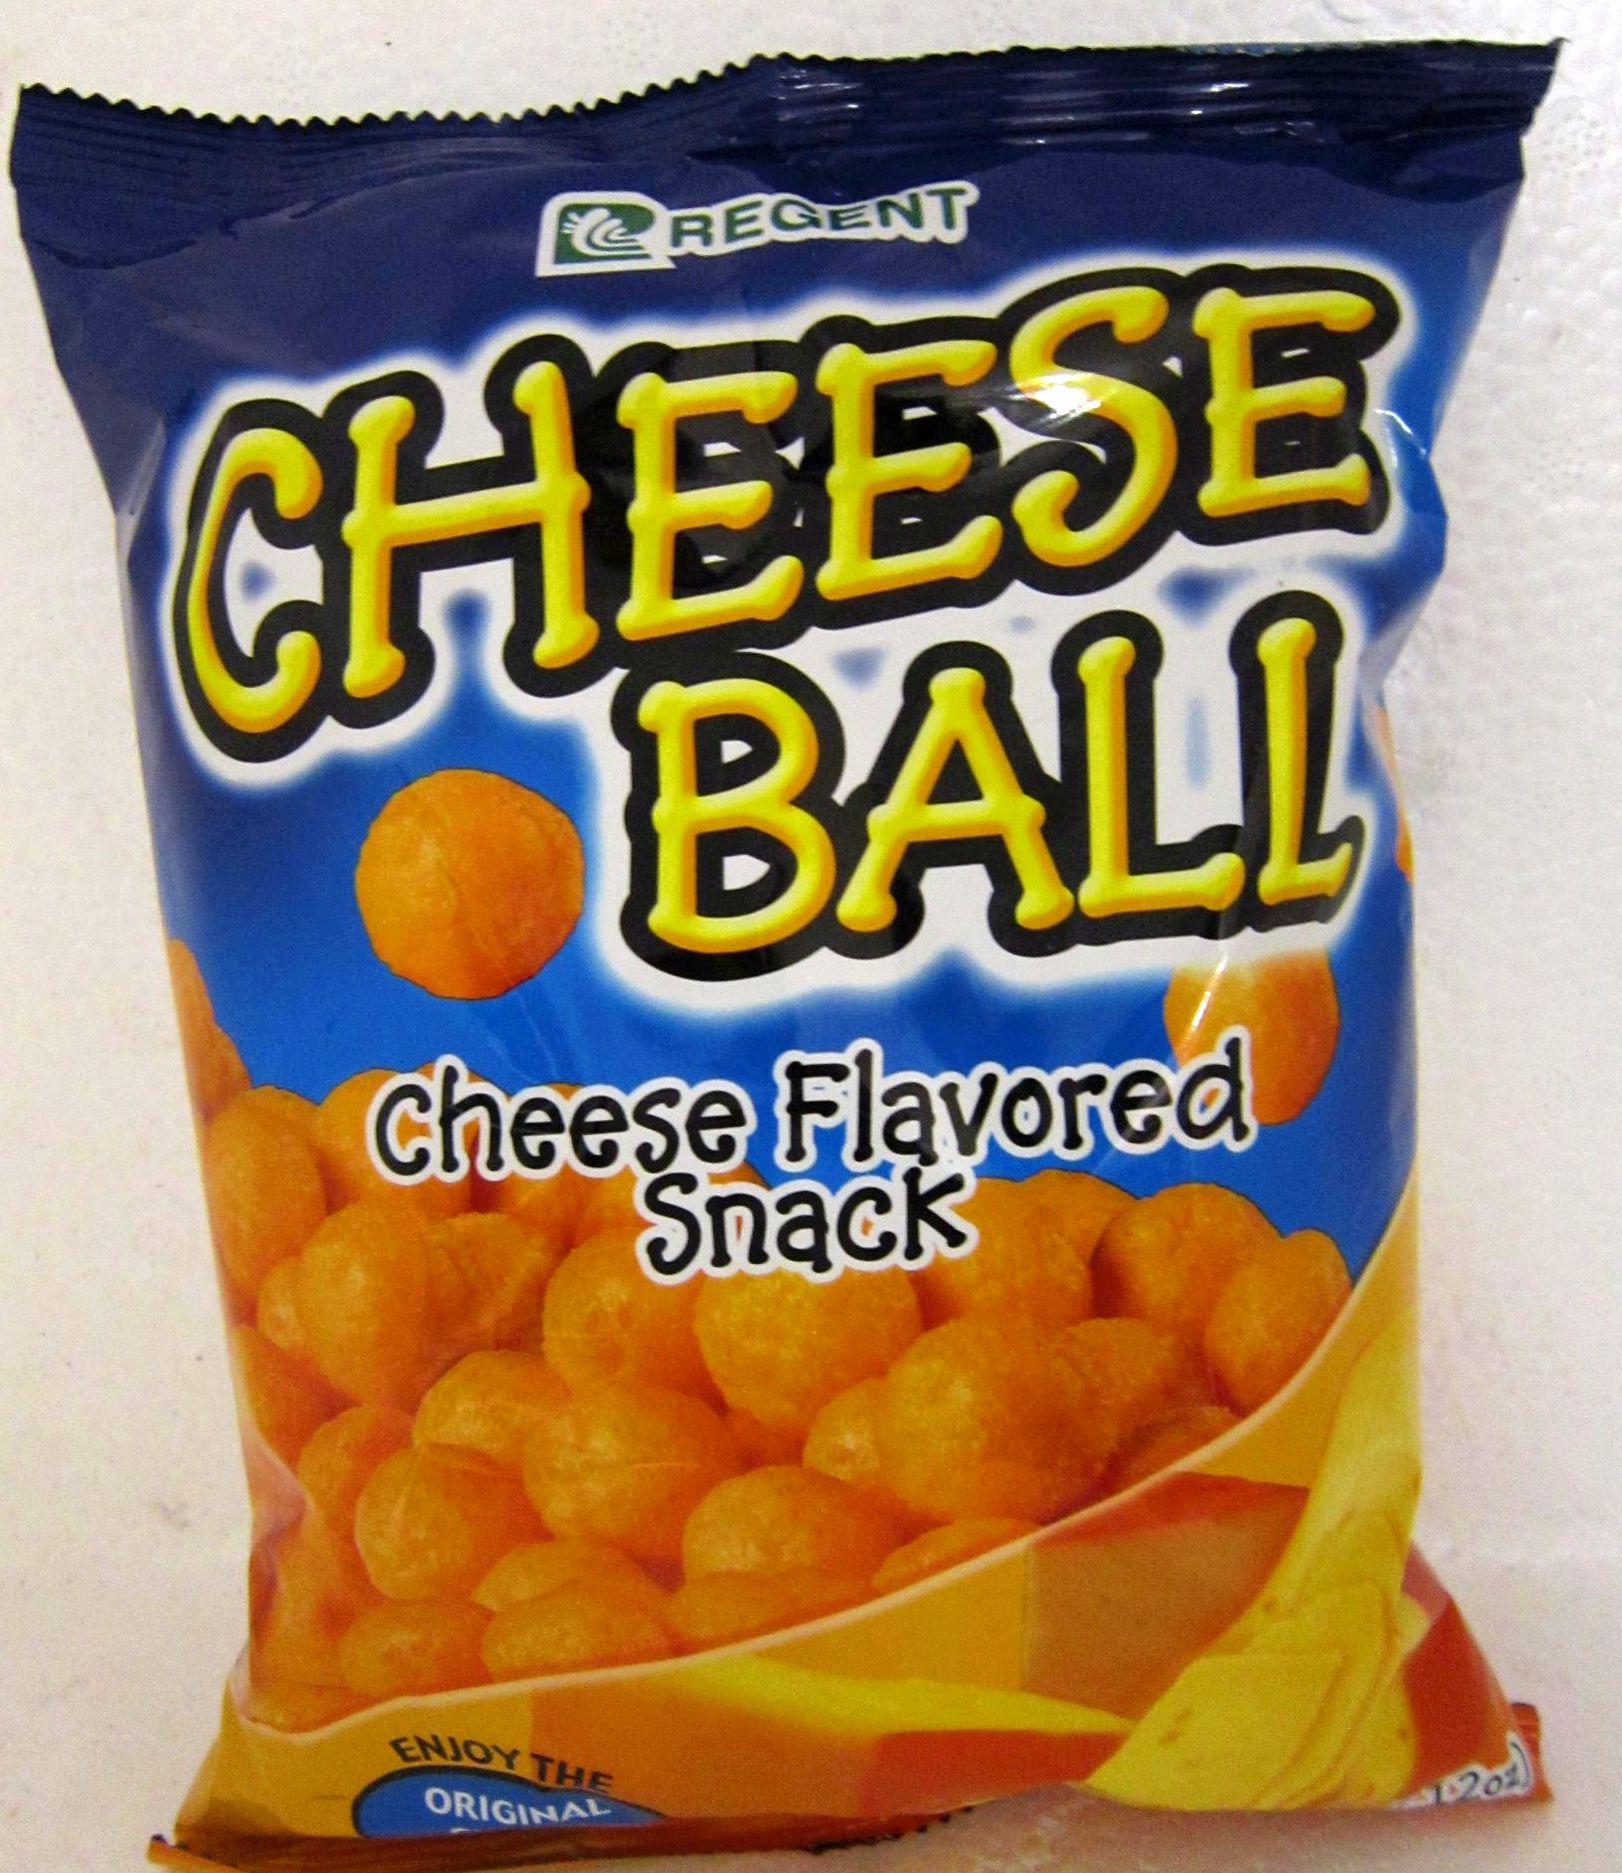 Regent Cheese Ball Image